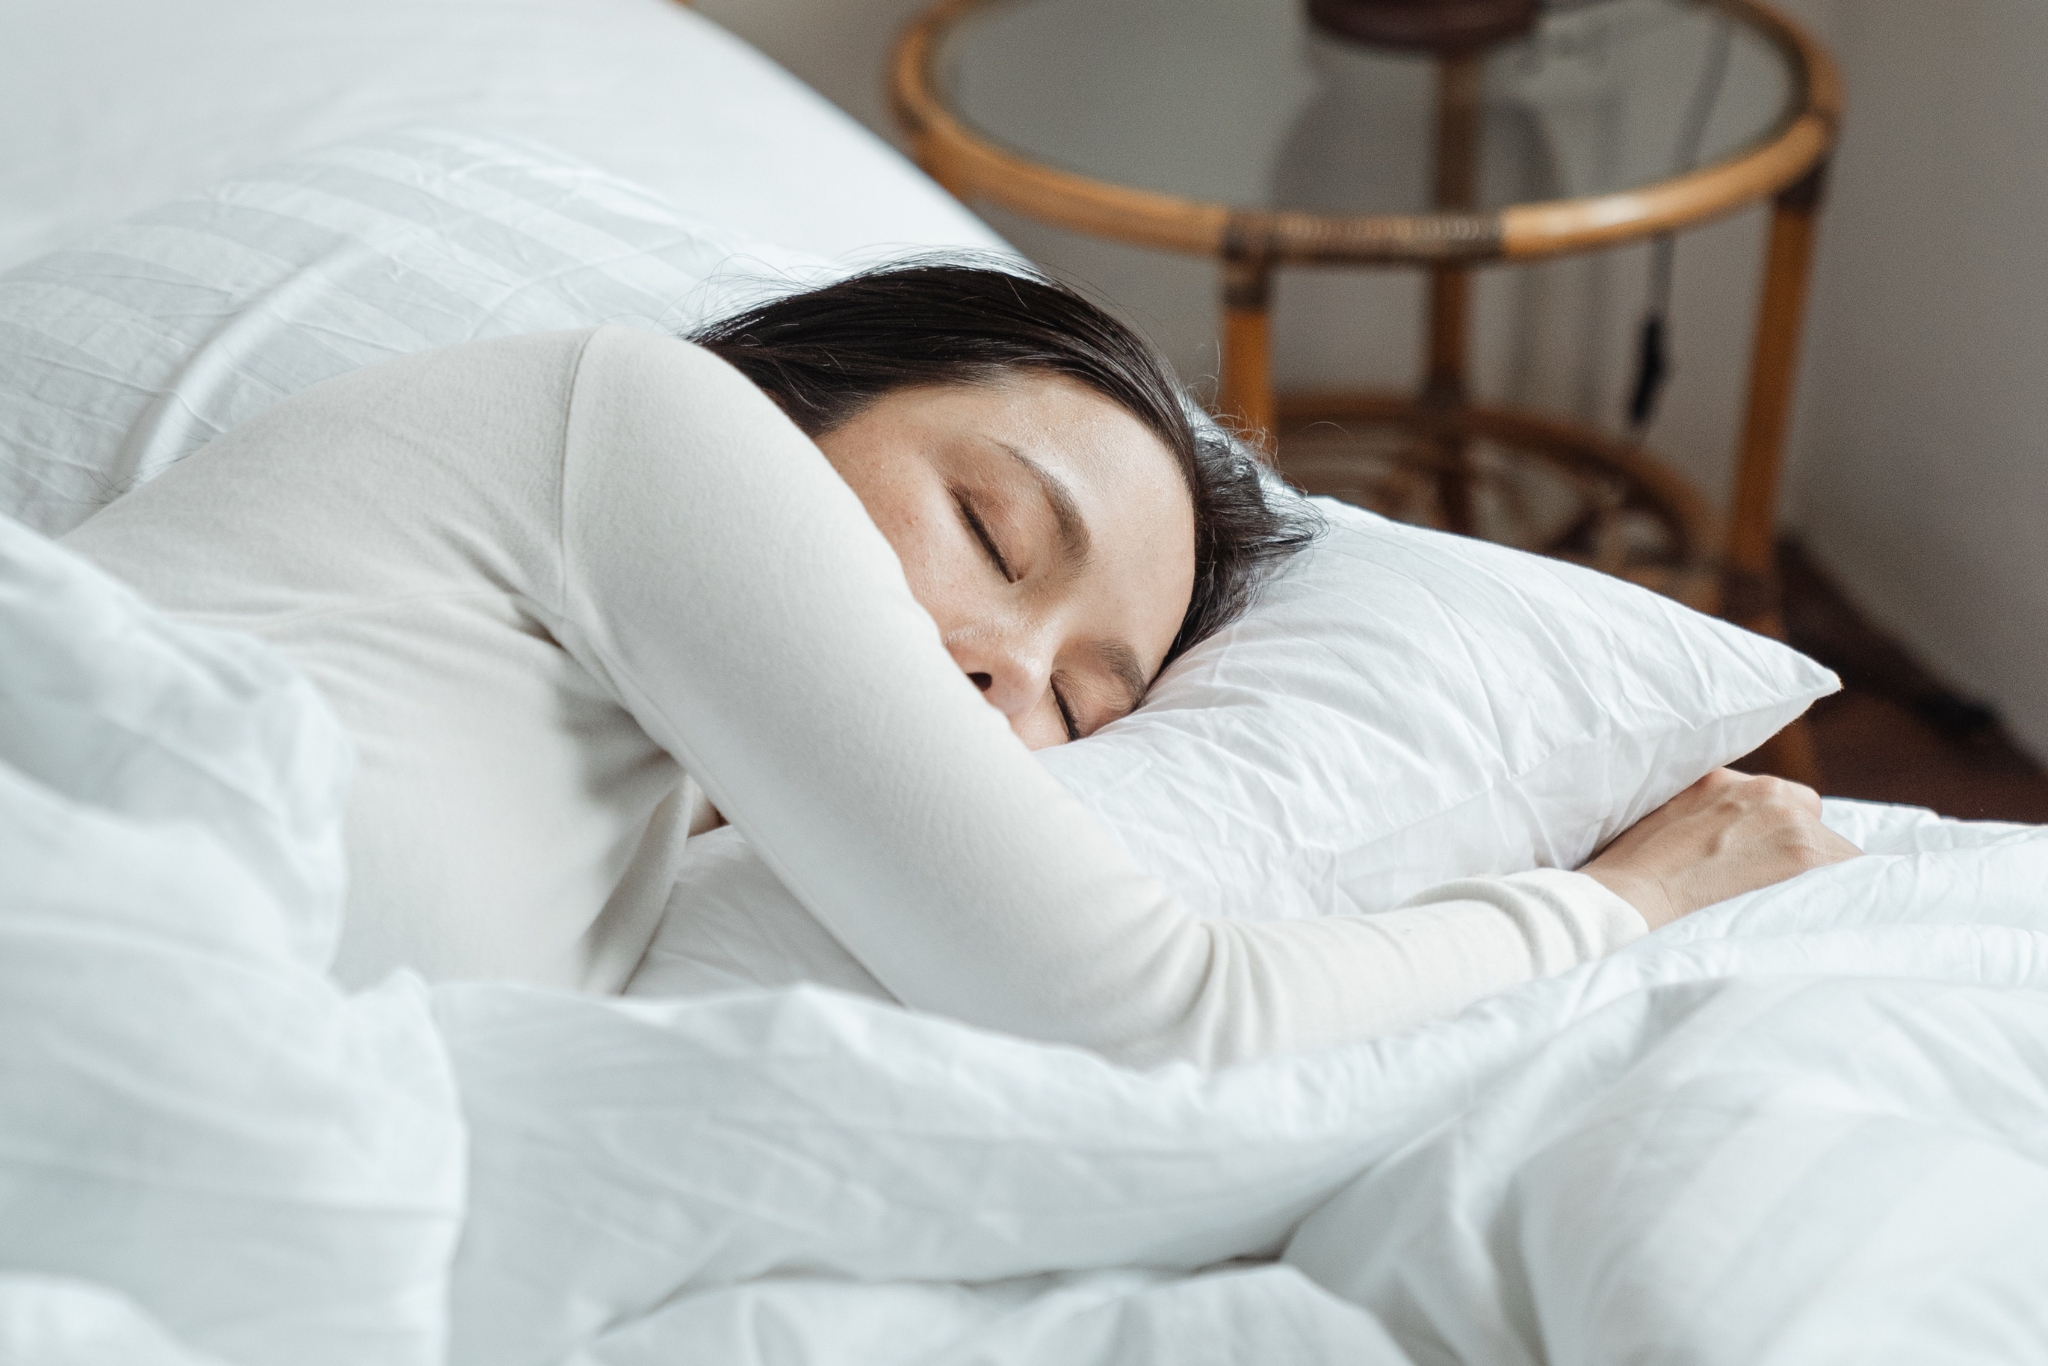 What is sleep-disordered breathing?